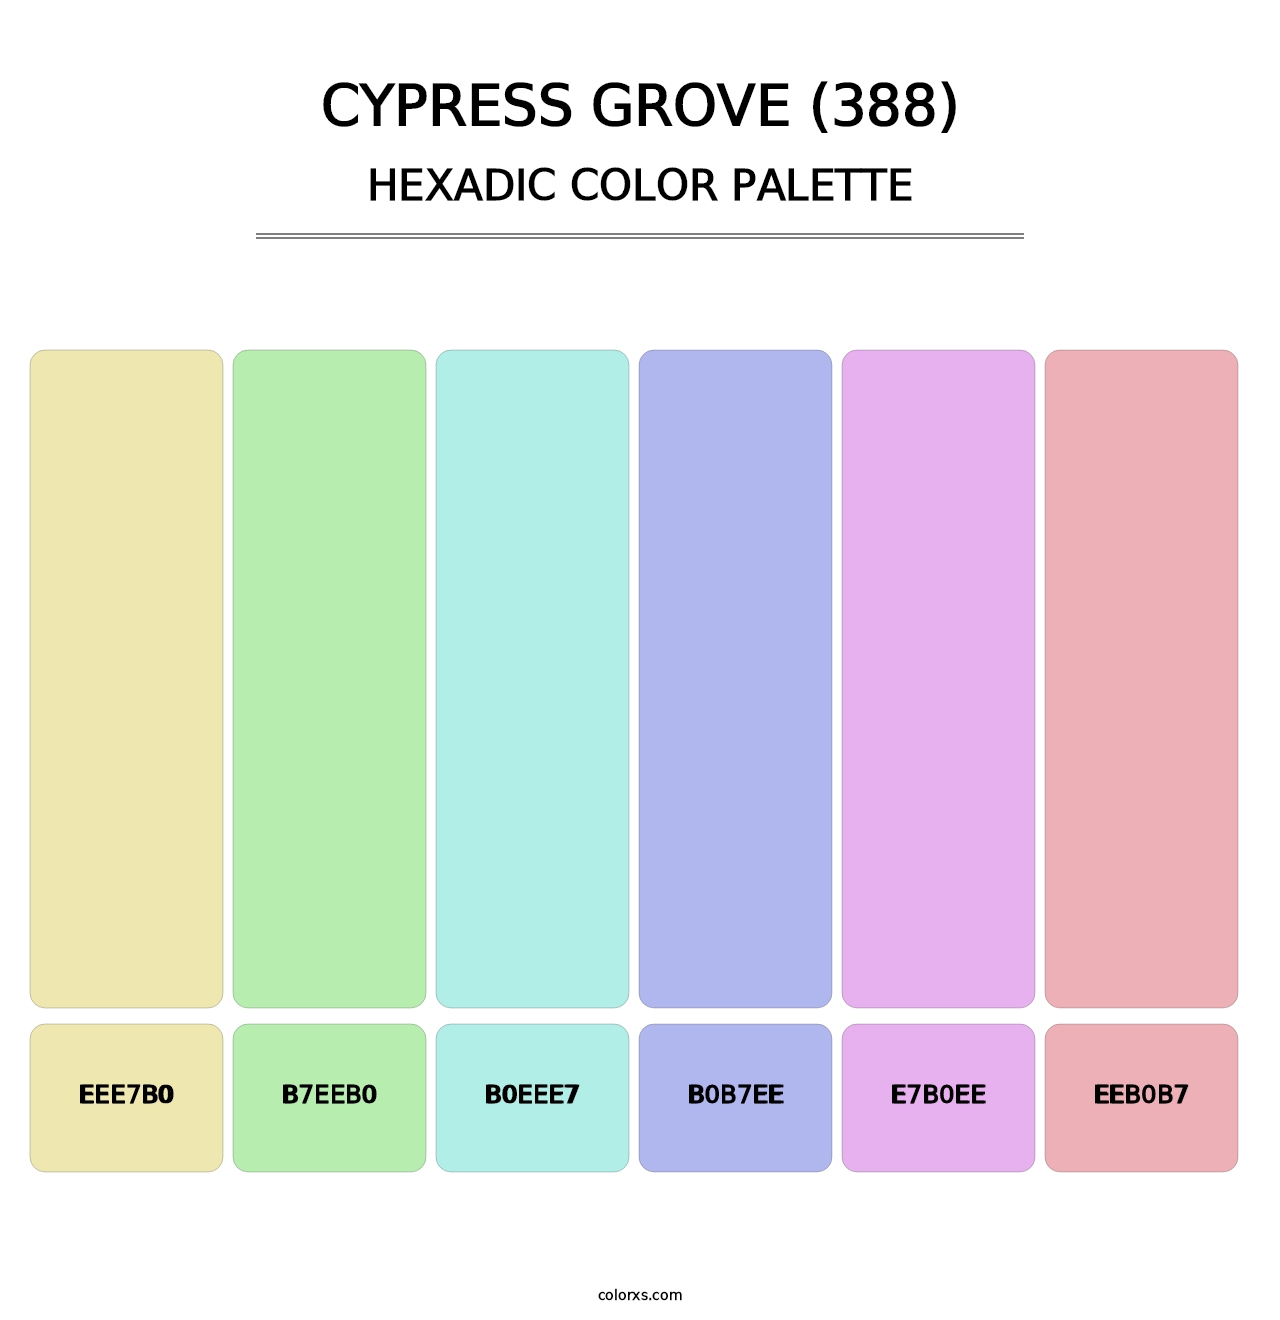 Cypress Grove (388) - Hexadic Color Palette